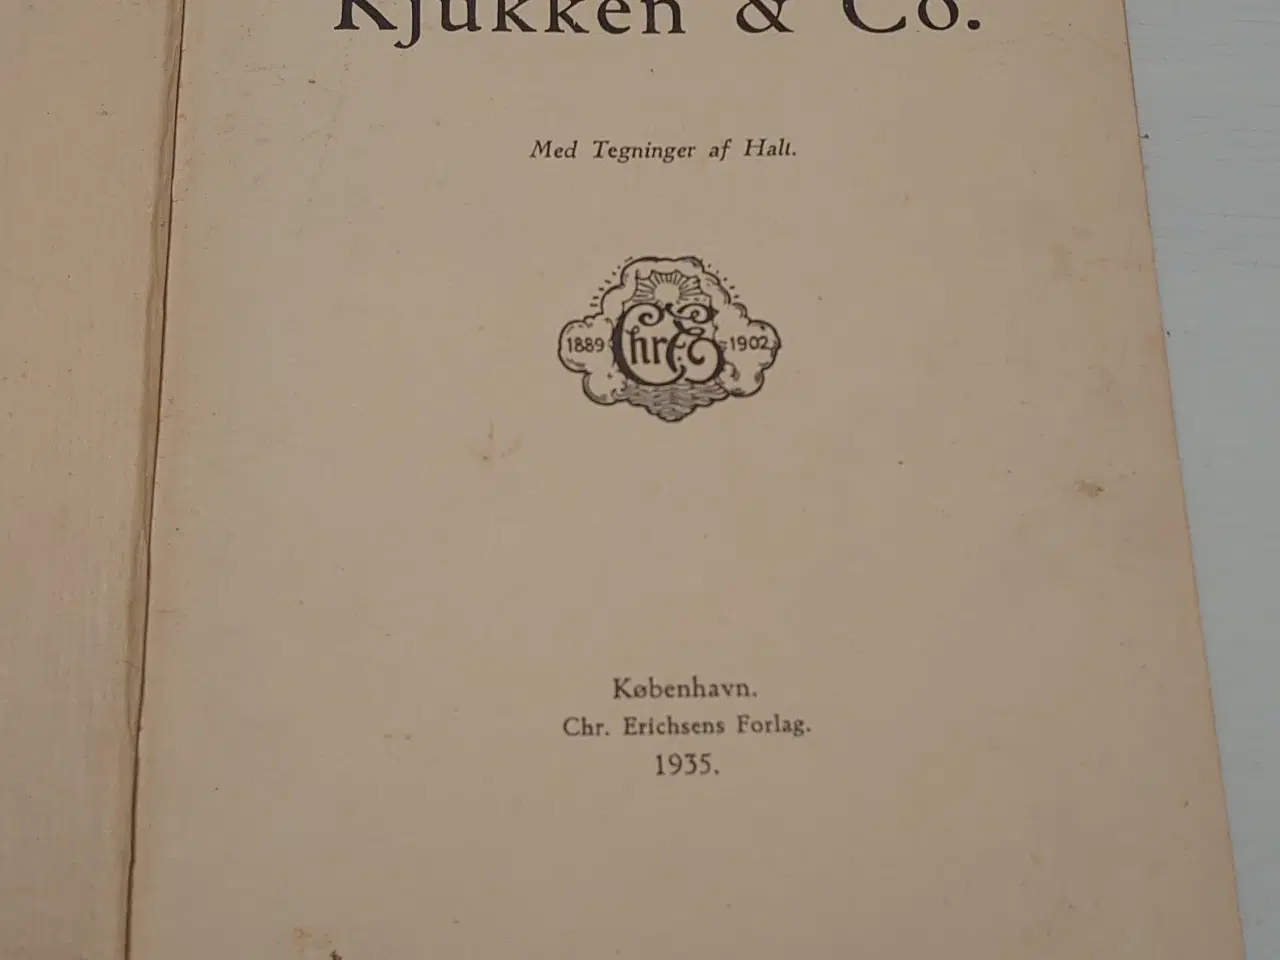 Billede 3 - Espen Ask: Kjukken og Co. ill. Hall. 1.udg. 1935